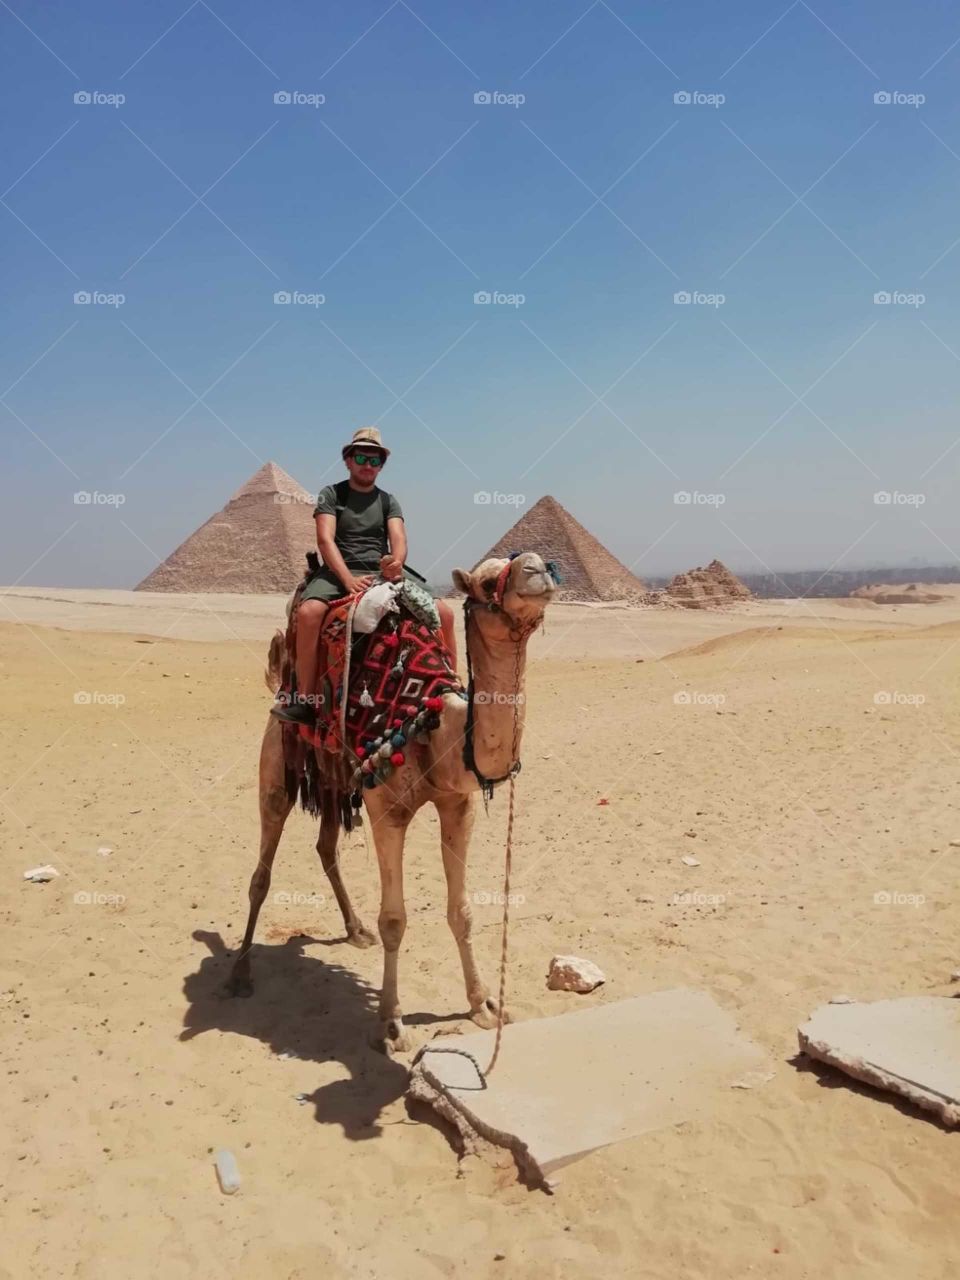 really very a nice camel around the desert pyramids with beautiful background panorama view pyramids.